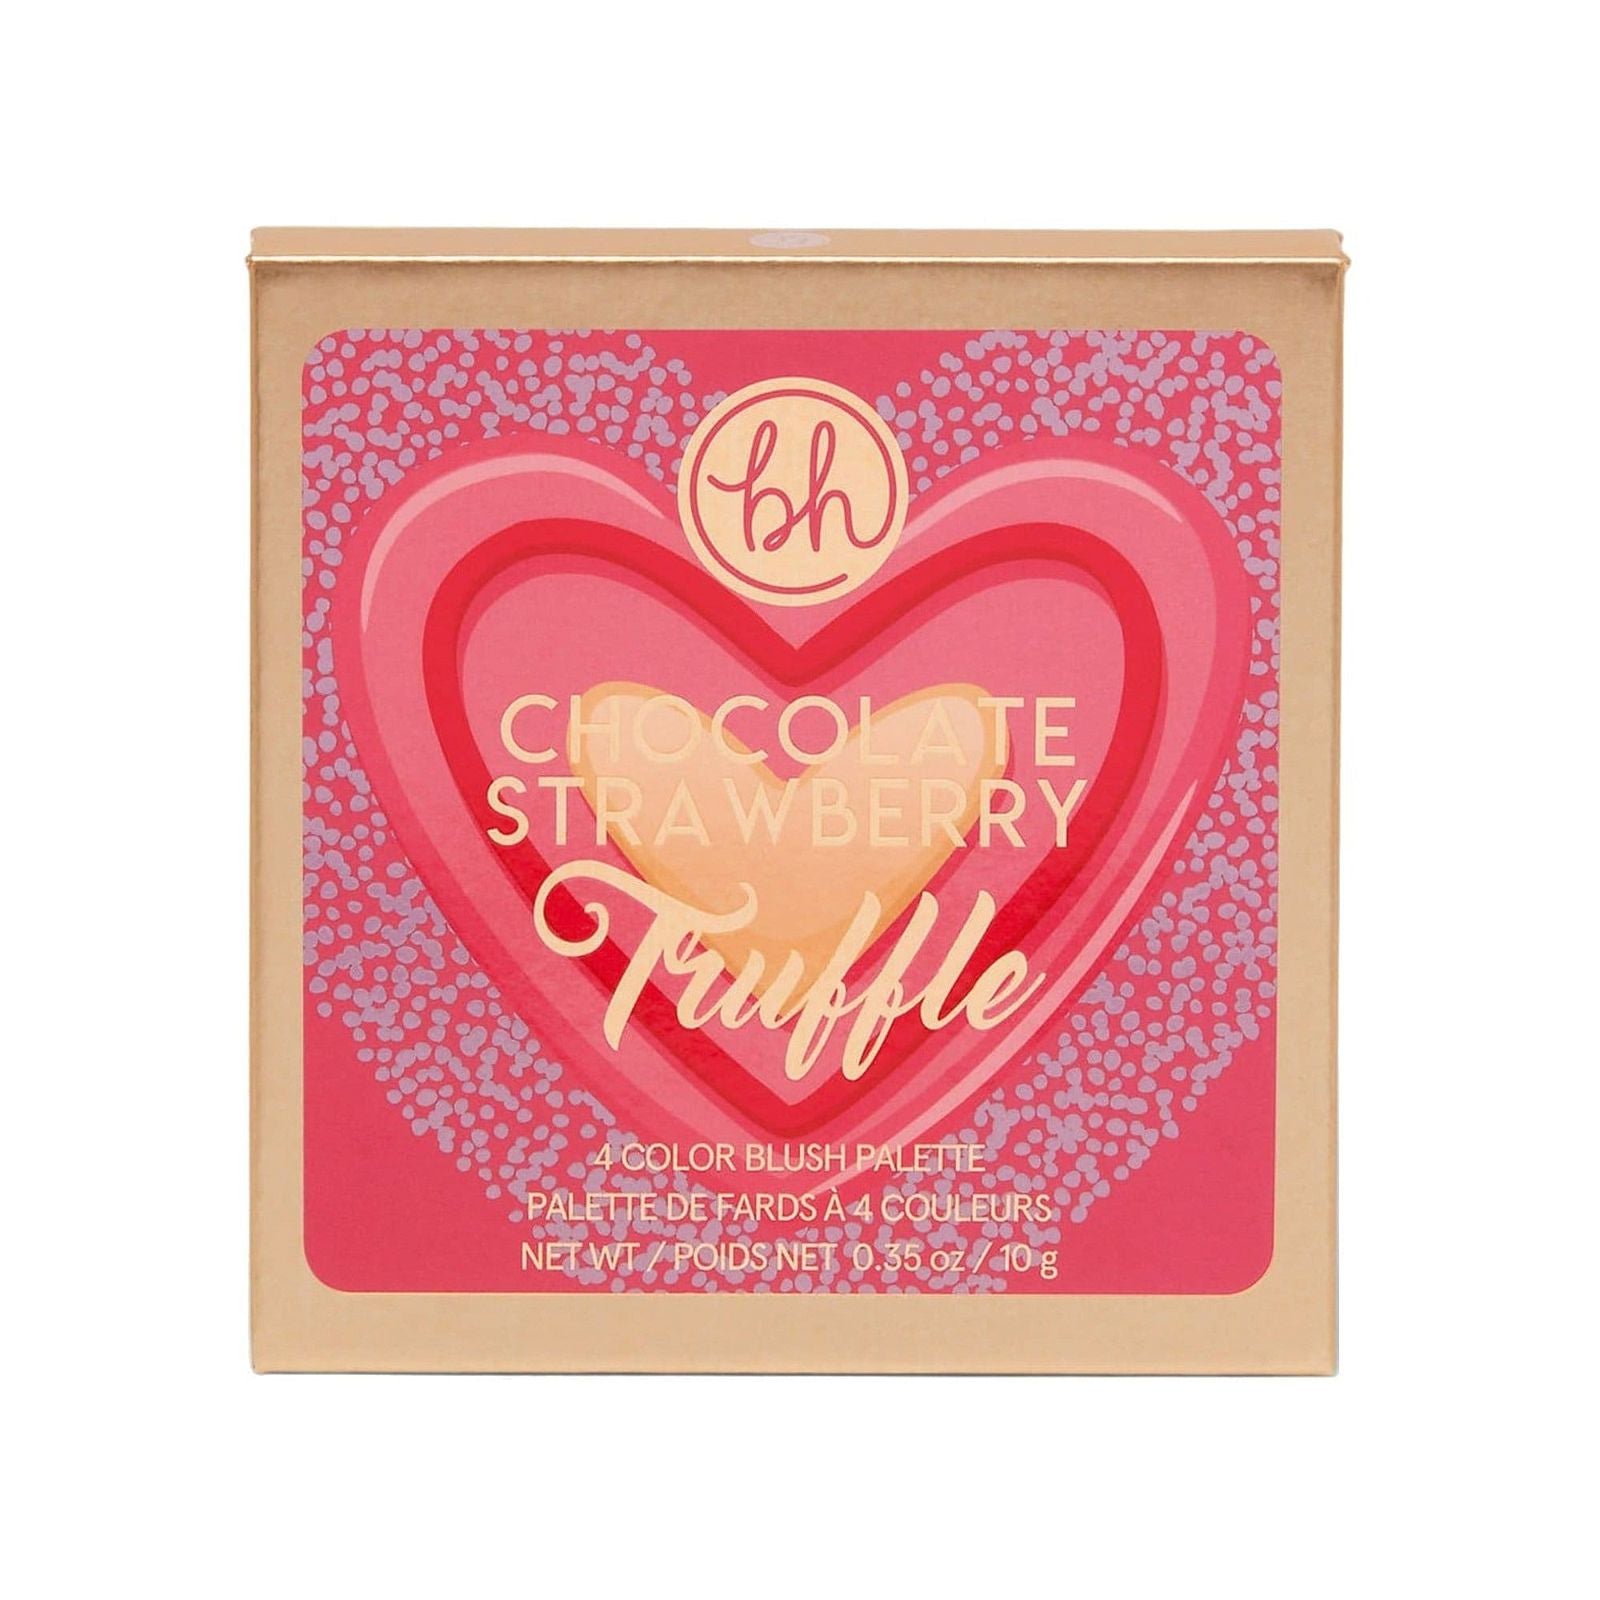 Bh Cosmetics Chocolate Strawberry Truffle 4 Color Blush Palette - Vitamins House